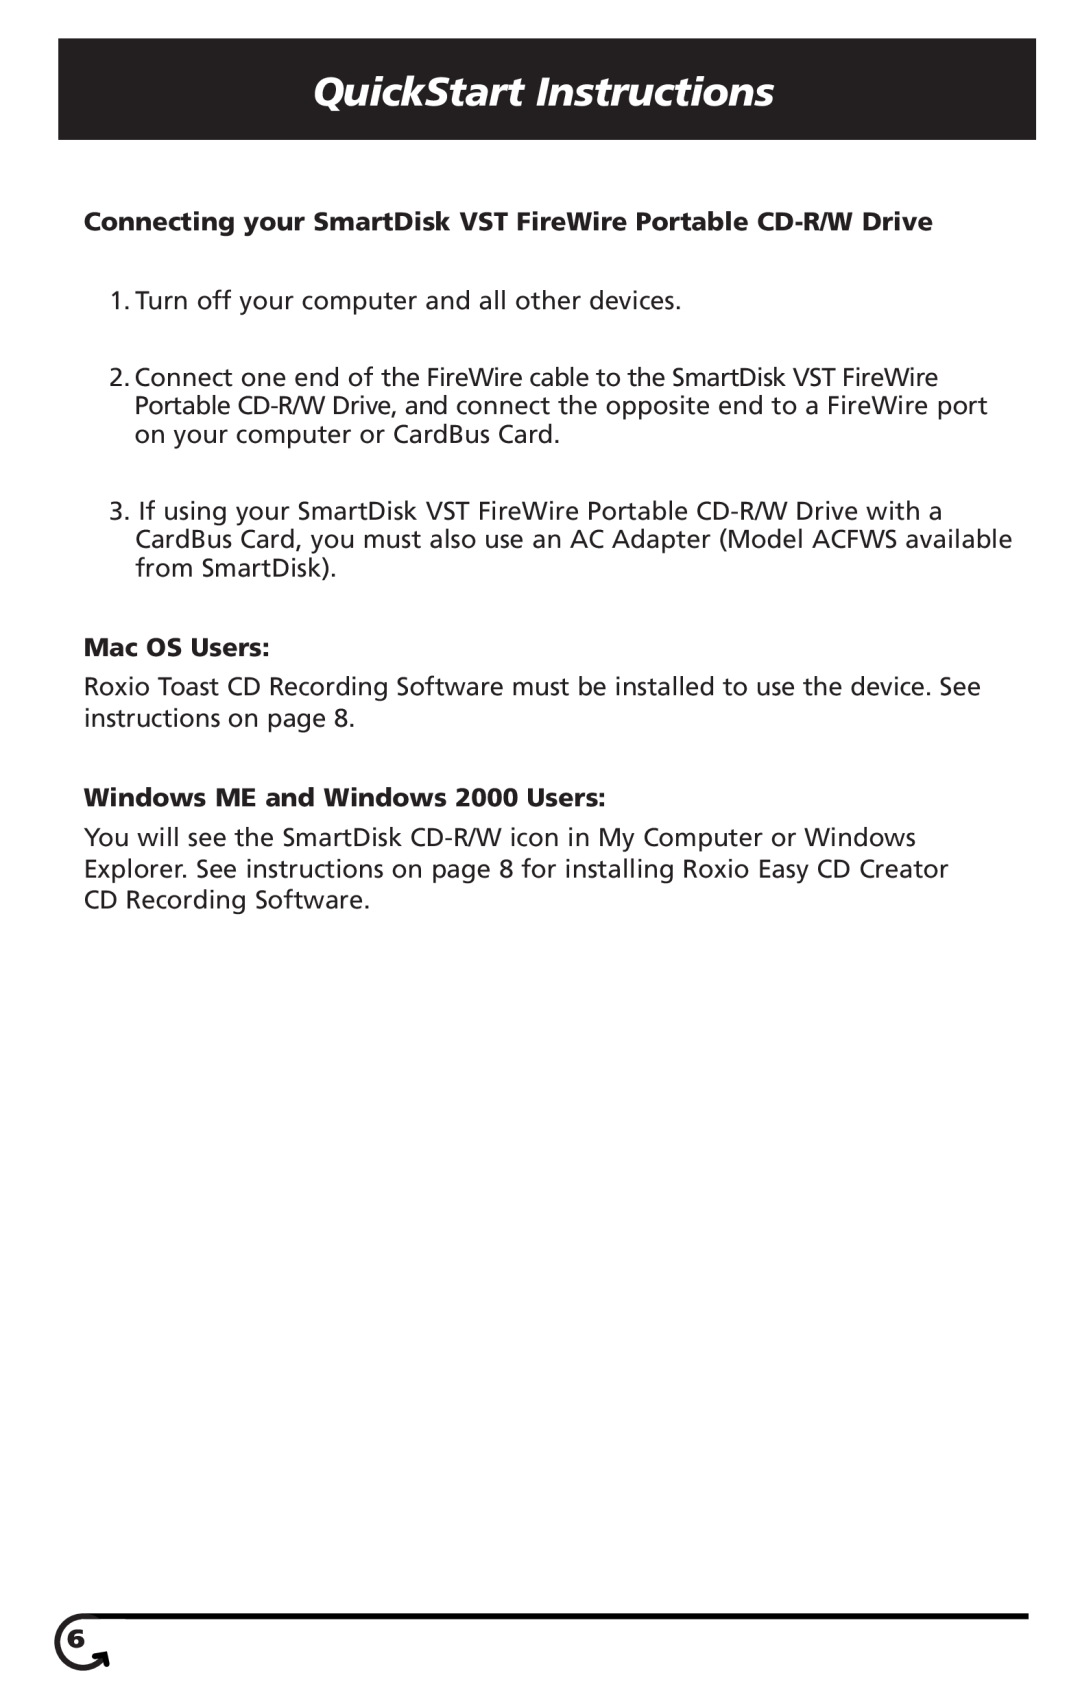 SmartDisk VST FireWireTM Portable CD-R/W Drive QuickStart Instructions, Mac OS Users, Windows ME and Windows 2000 Users 